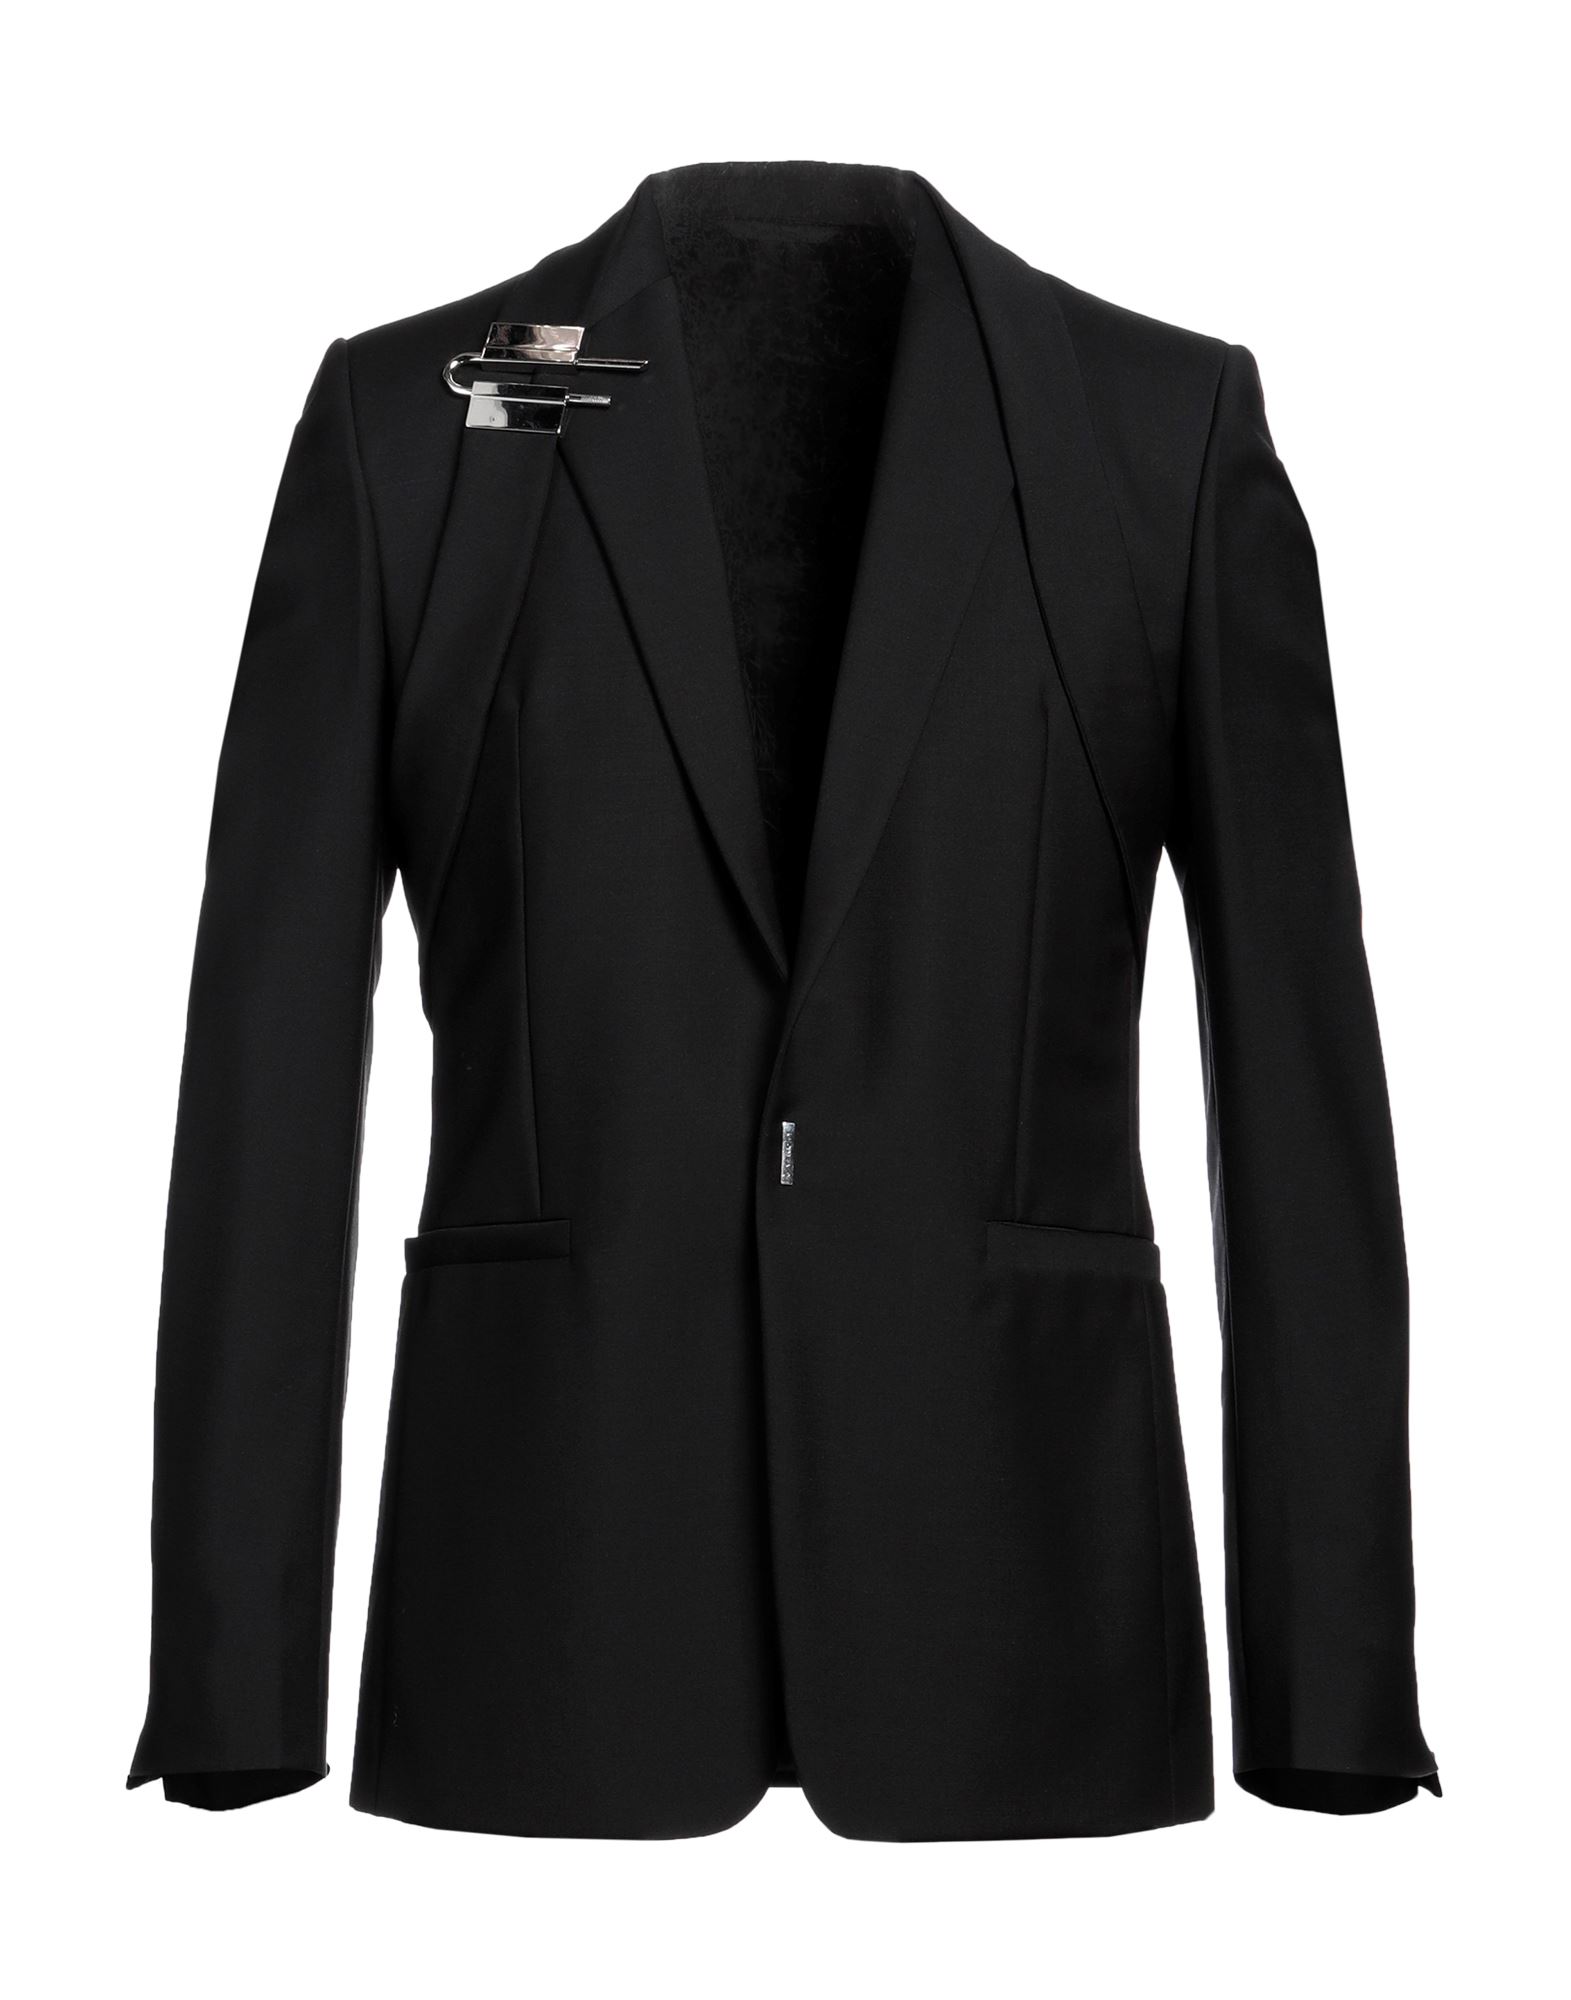 Givenchy ジバンシー メンズスーツ上下セット ストライプ柄 52 サイズ型番7S100142